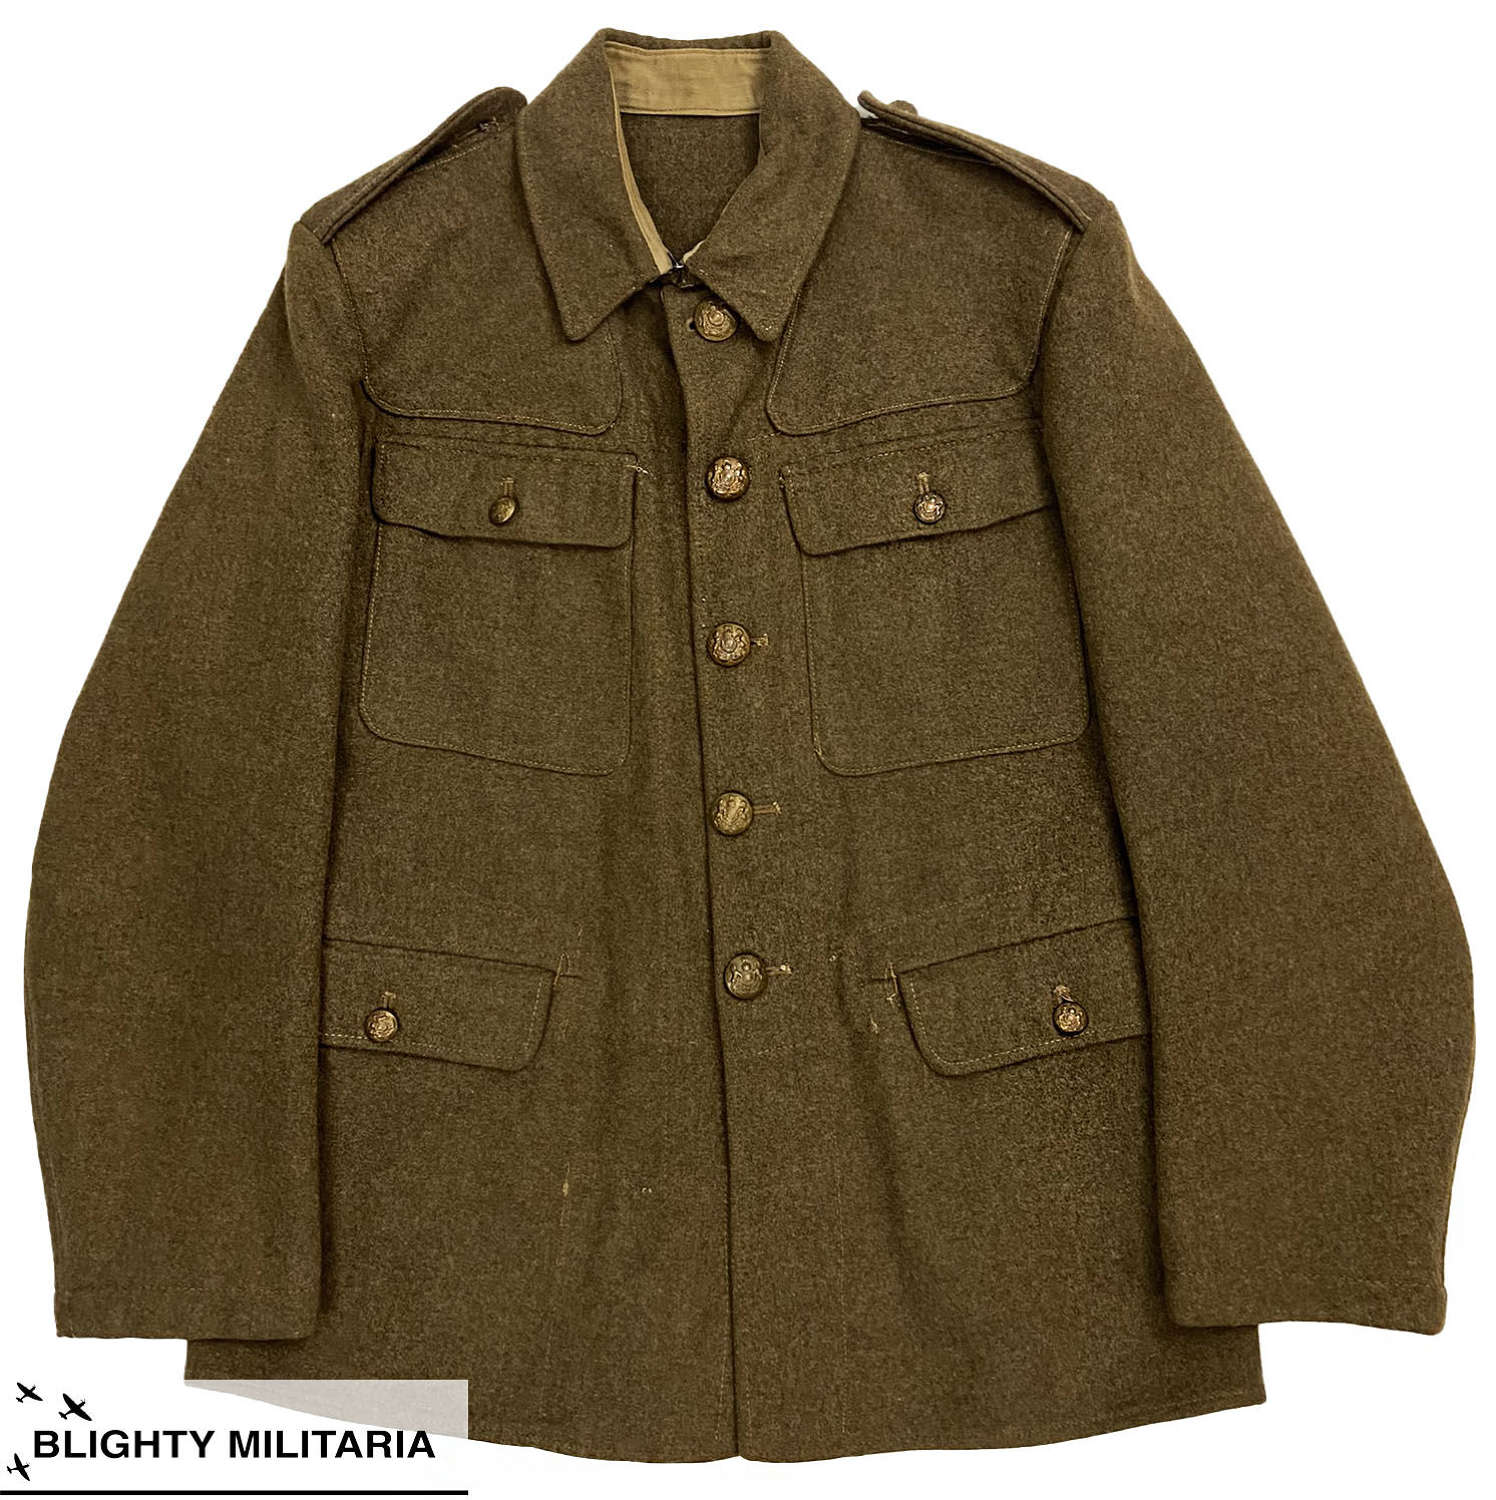 Original 1942 Dated British Army Service Dress Jacket - Size 12